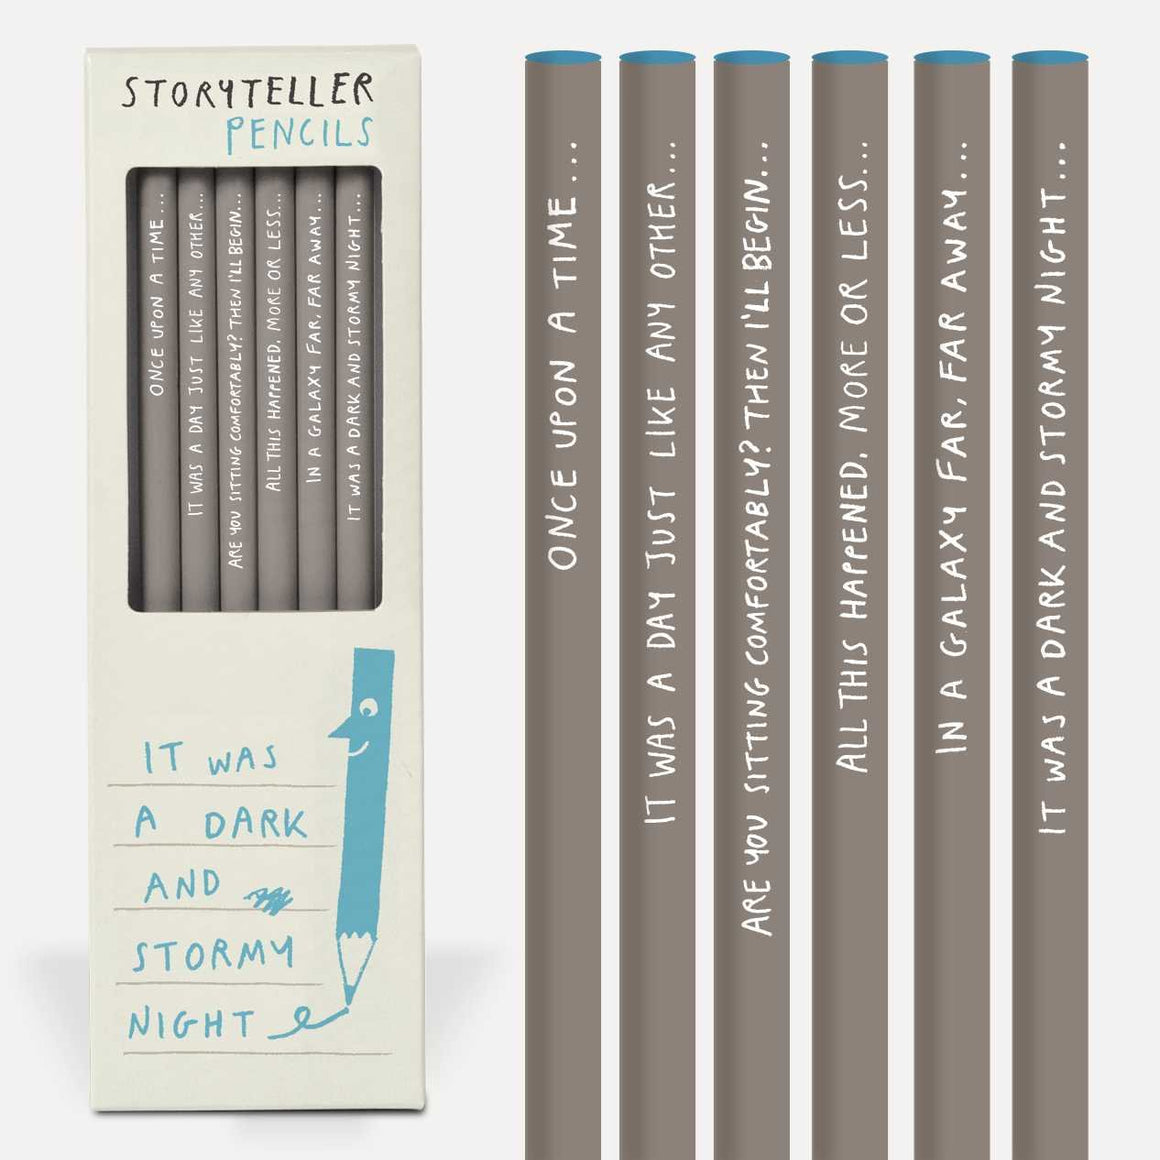 Storyteller Pencils